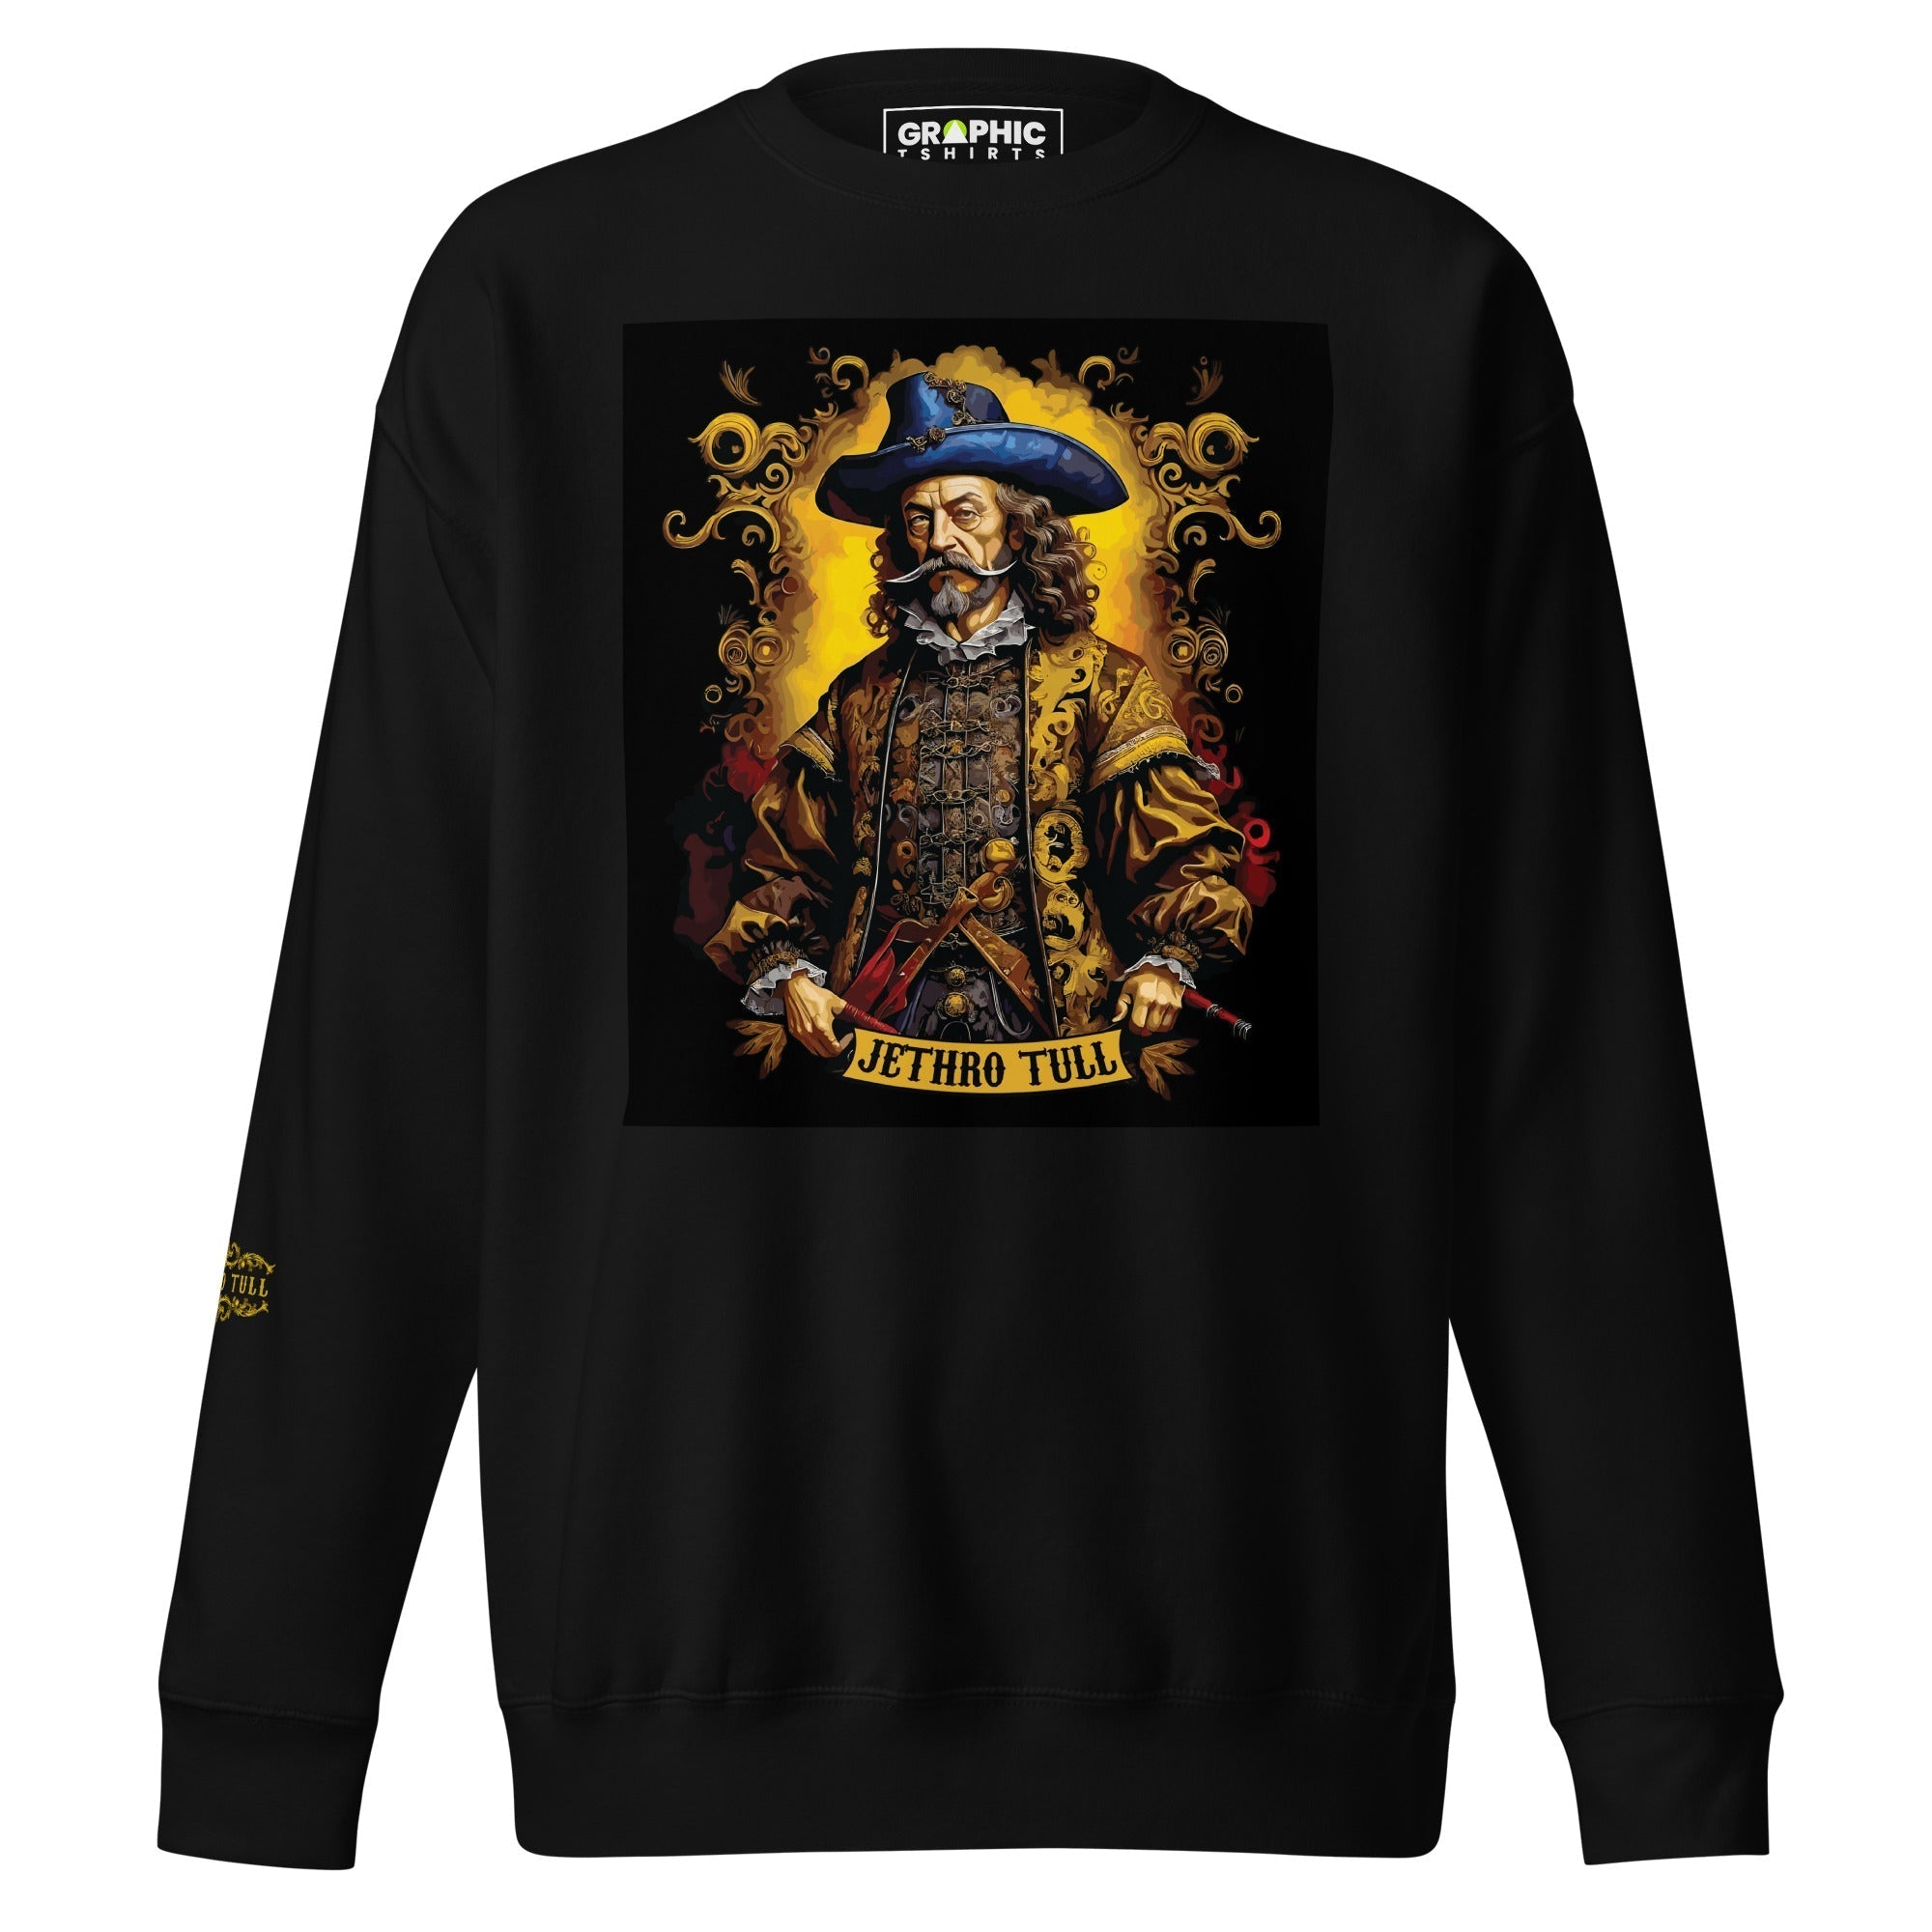 Unisex Premium Sweatshirt - Jethro Tull The Quintessential Artist Series v.3 - GRAPHIC T-SHIRTS